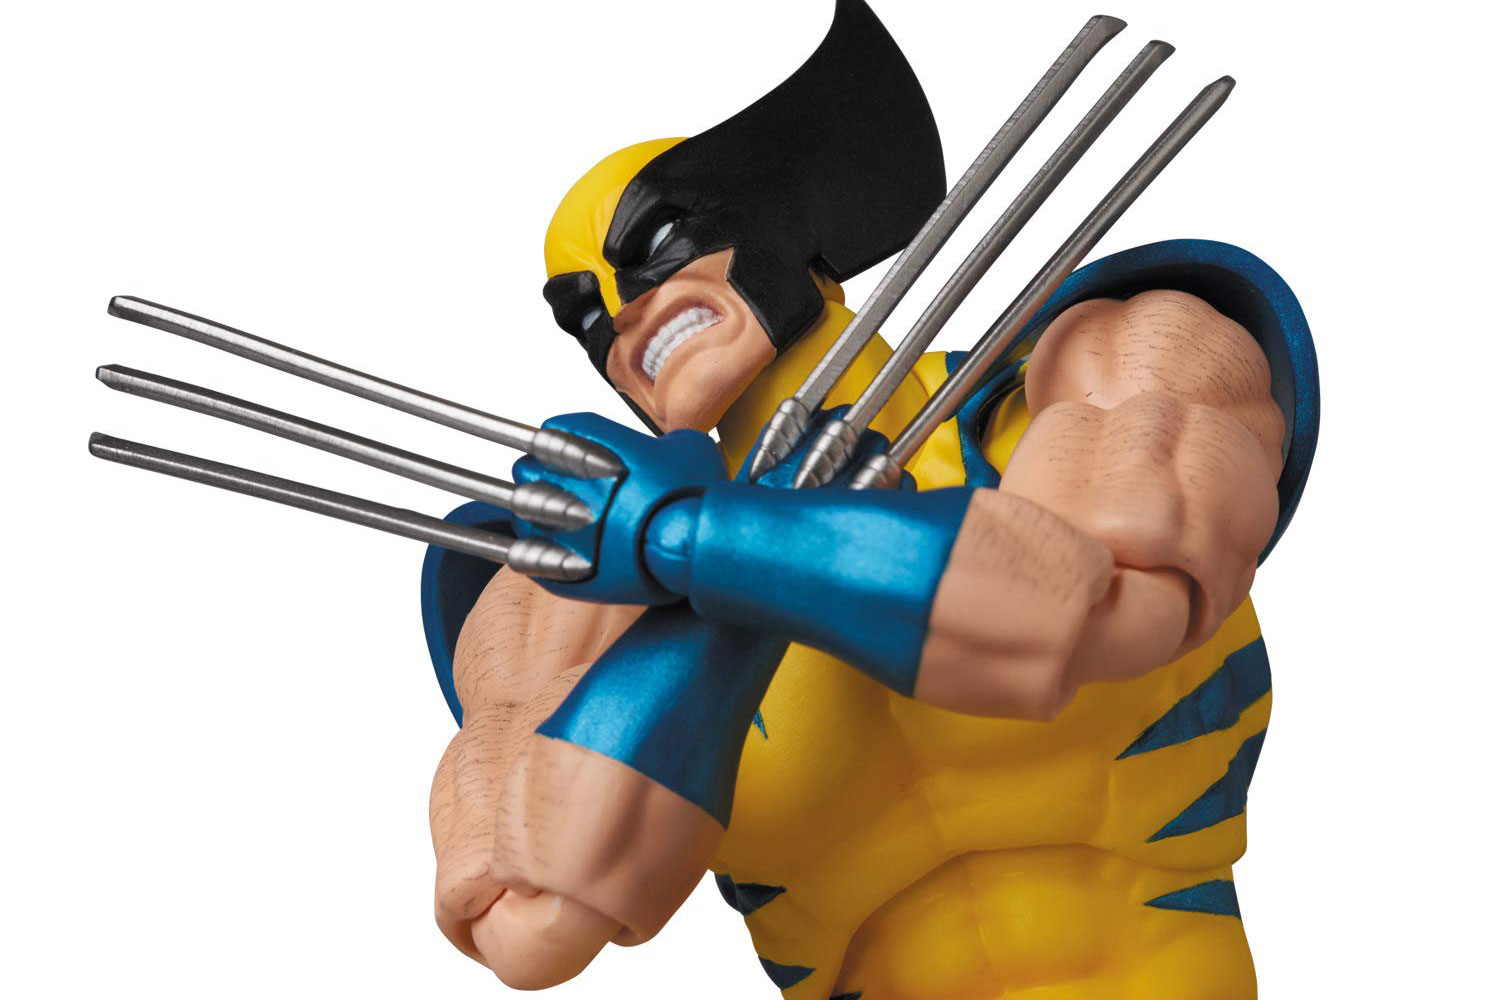 Mafex新作 X Menよりウルヴァリン コミックver が19年11月に発売決定 Frc